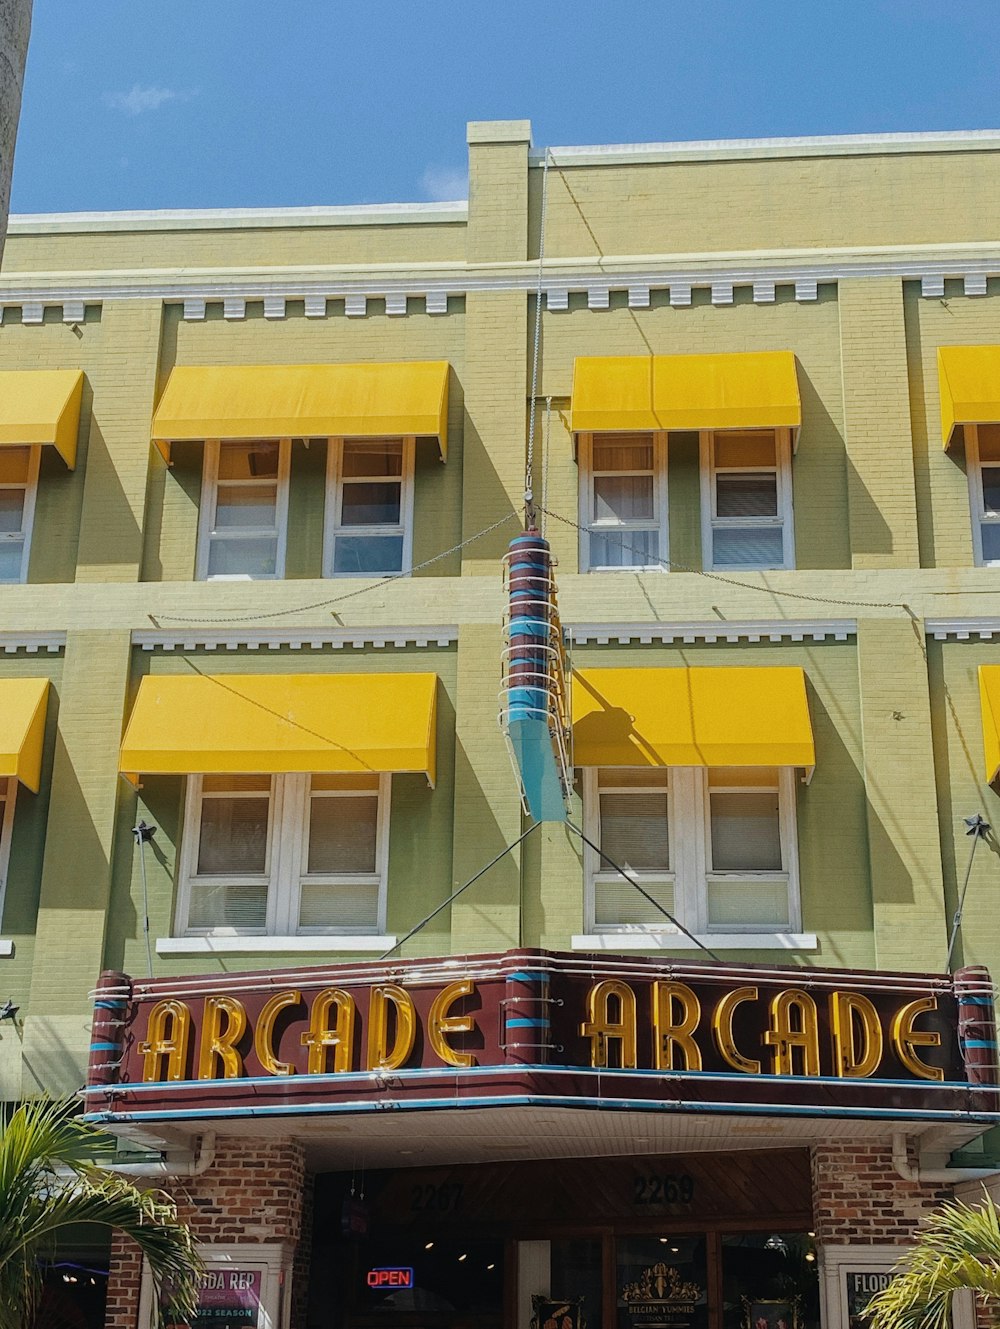 Un edificio con un letrero que dice arcade arcade